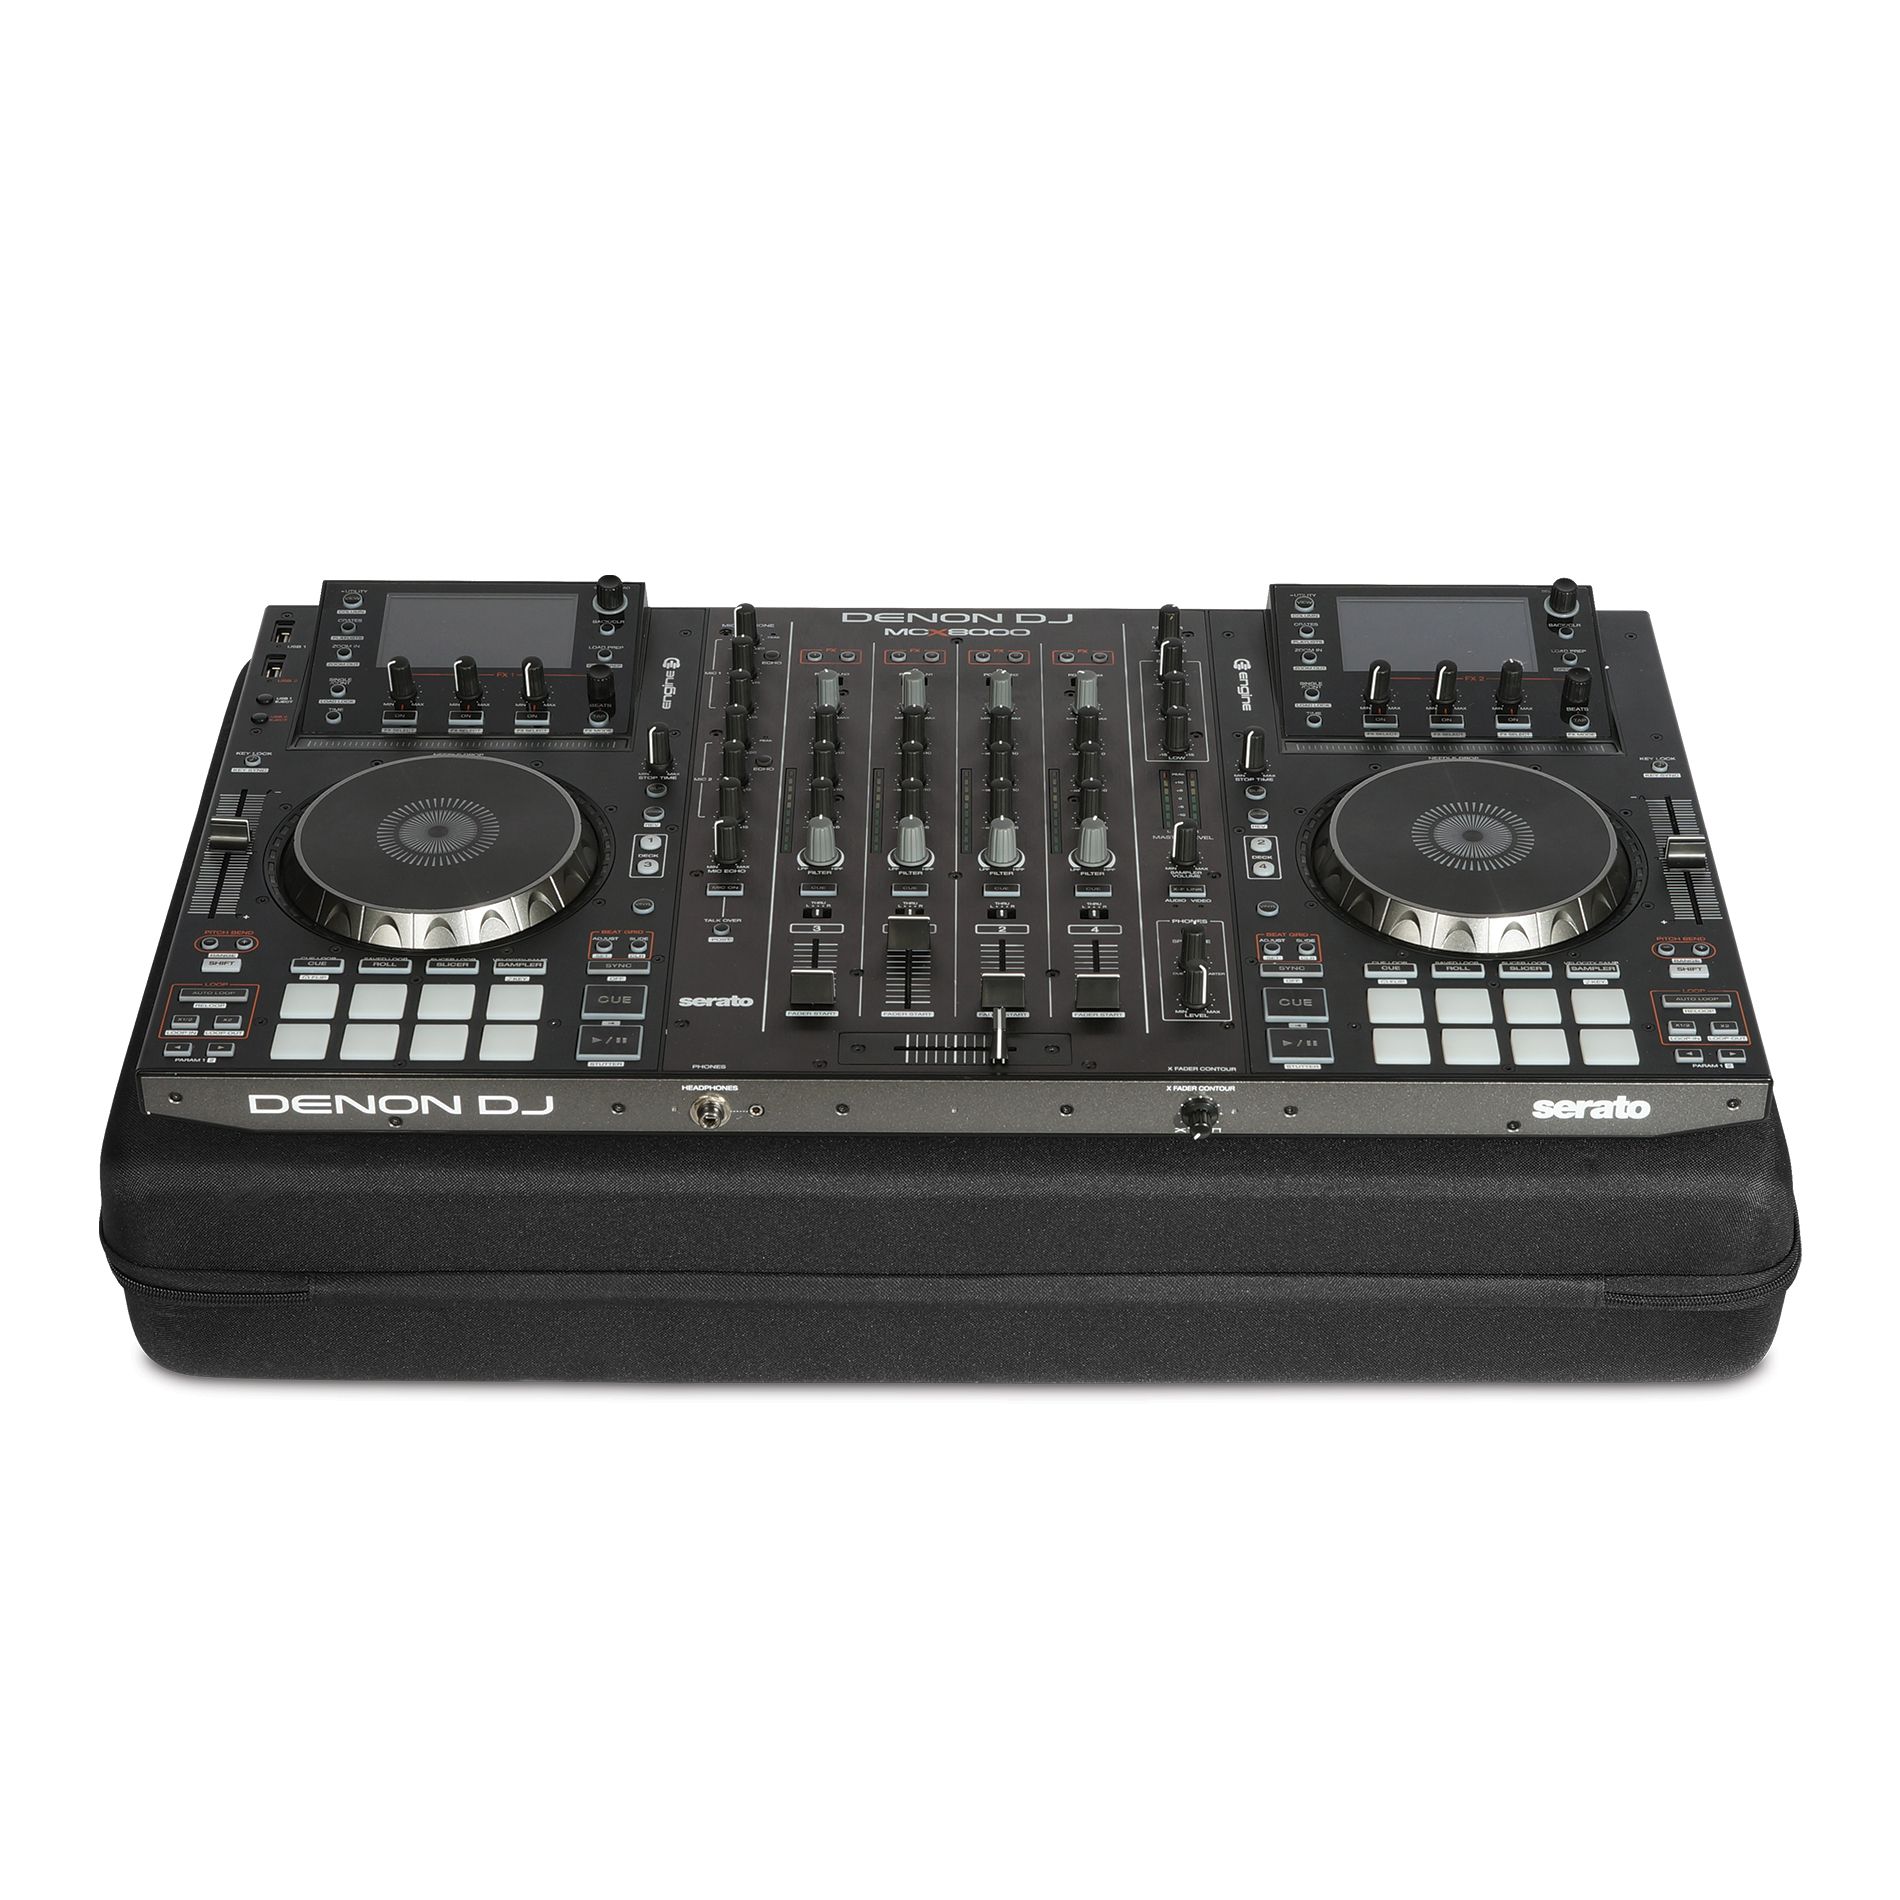 Udg U8305bl Pour Xdj-rx2 / Mcx8000 / Roland 808 - Funda DJ - Variation 2